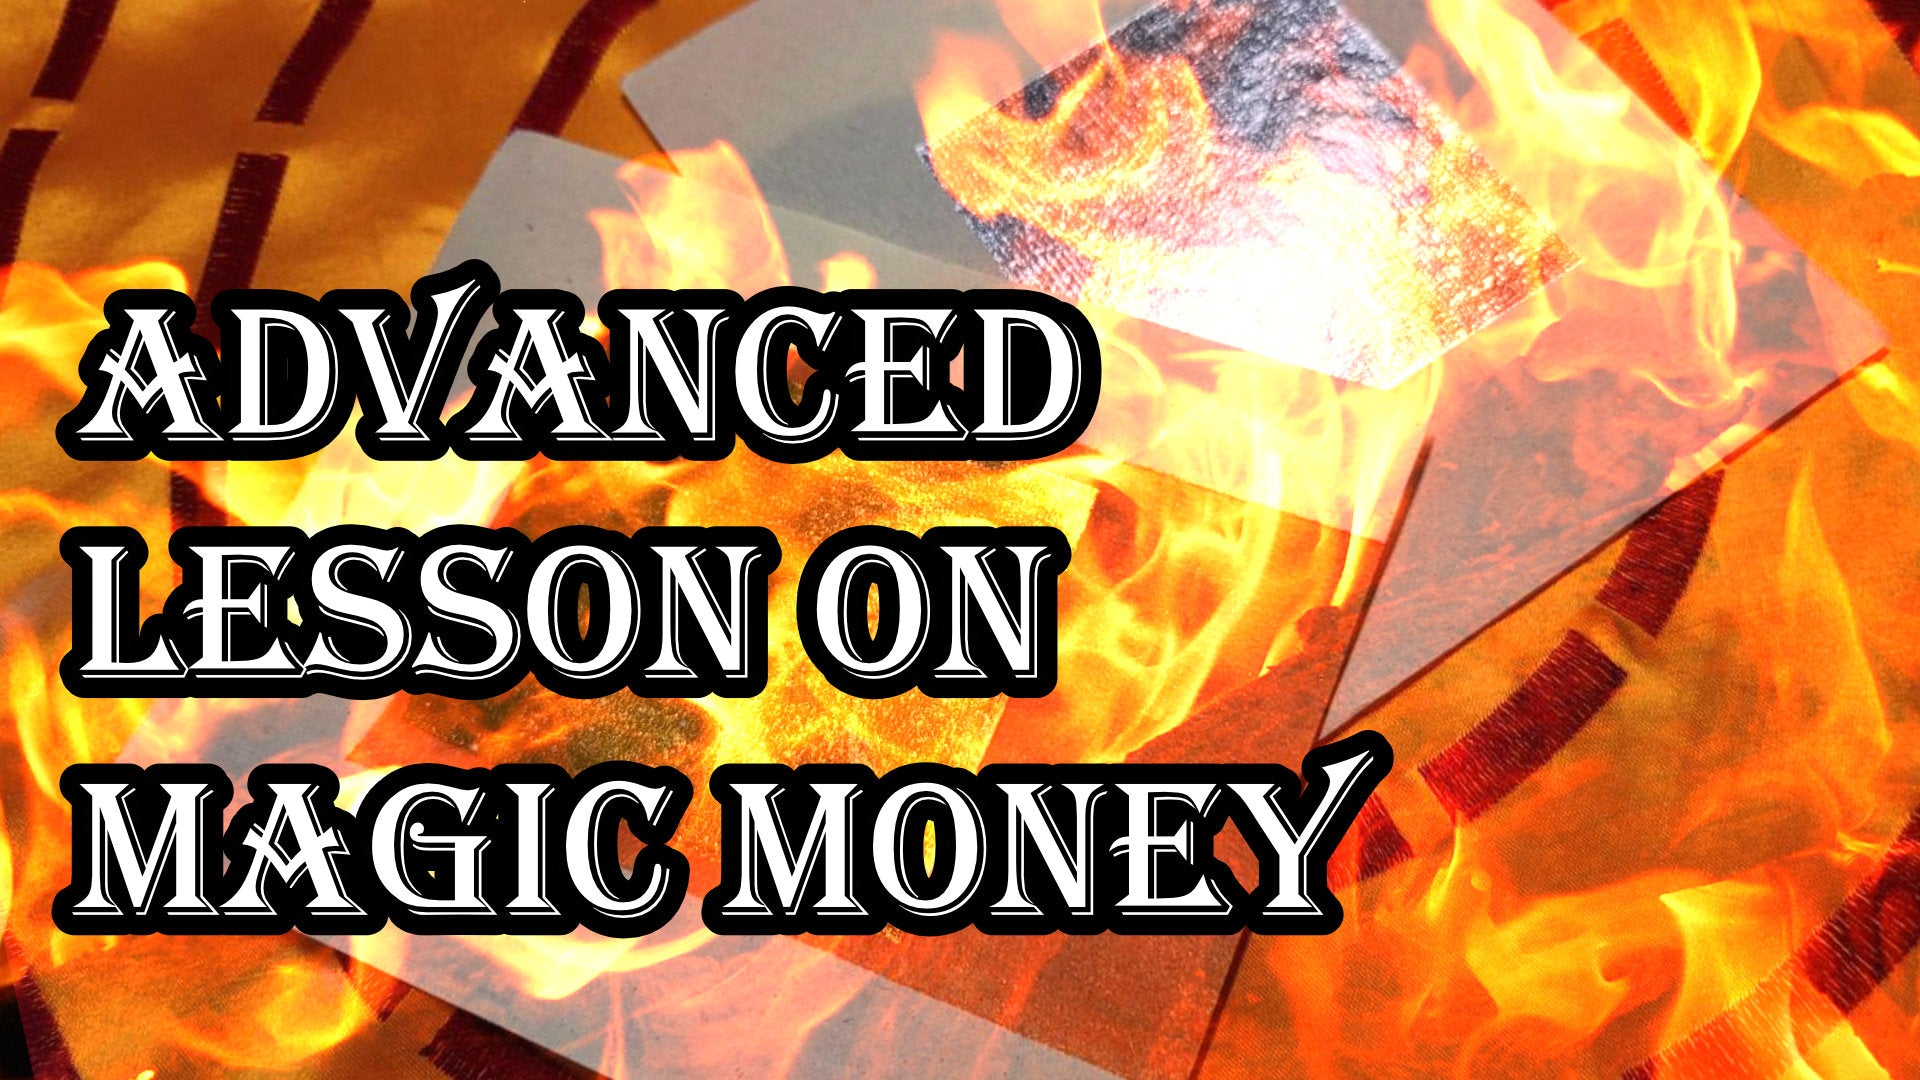 
          Magic Money Paper Offerings Advanced Lesson
        